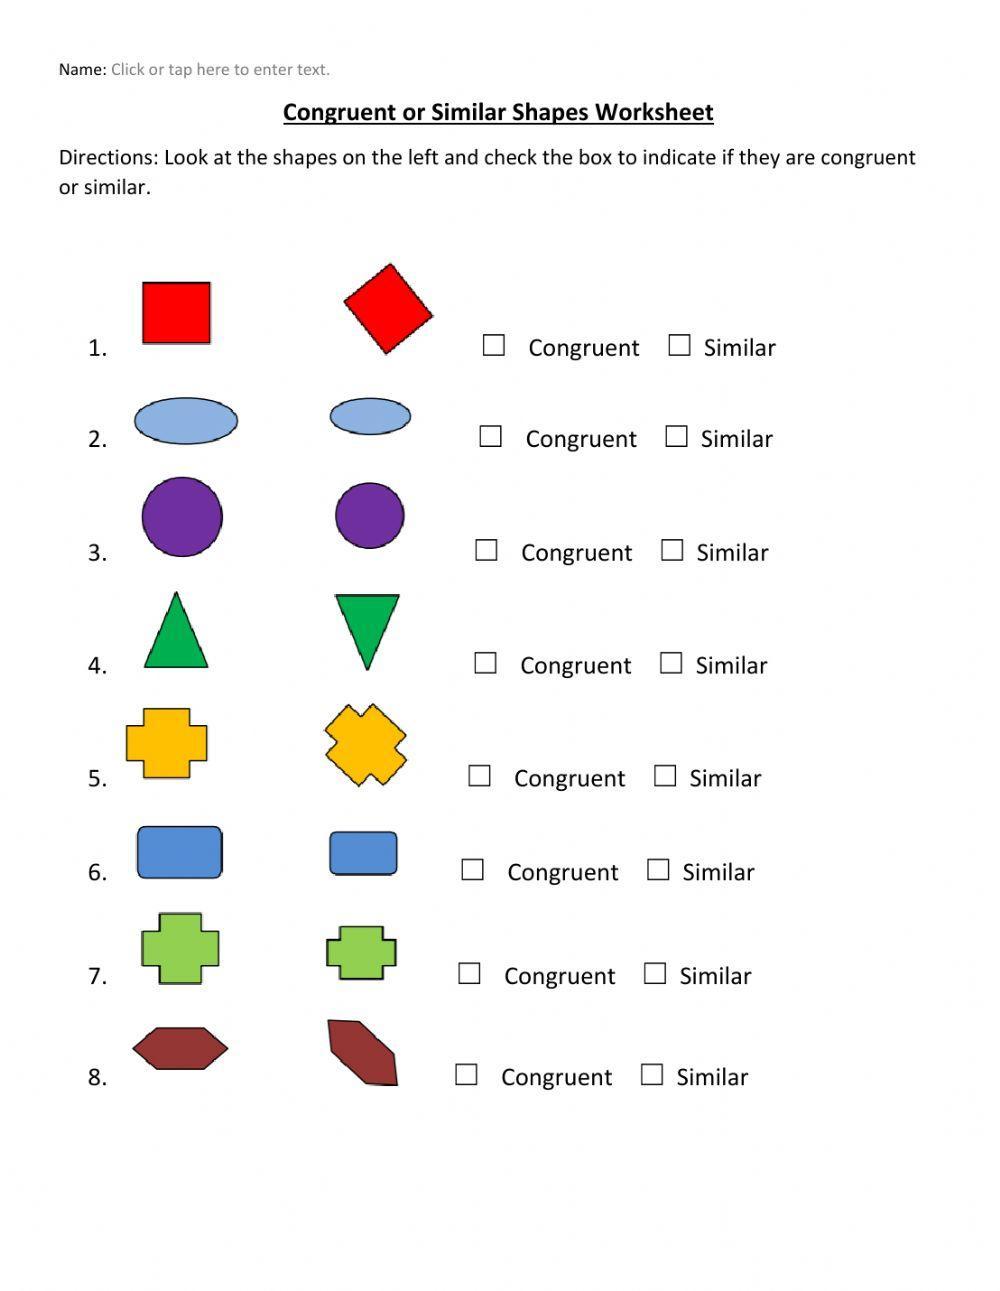 Congruent or Similar Shapes Worksheet